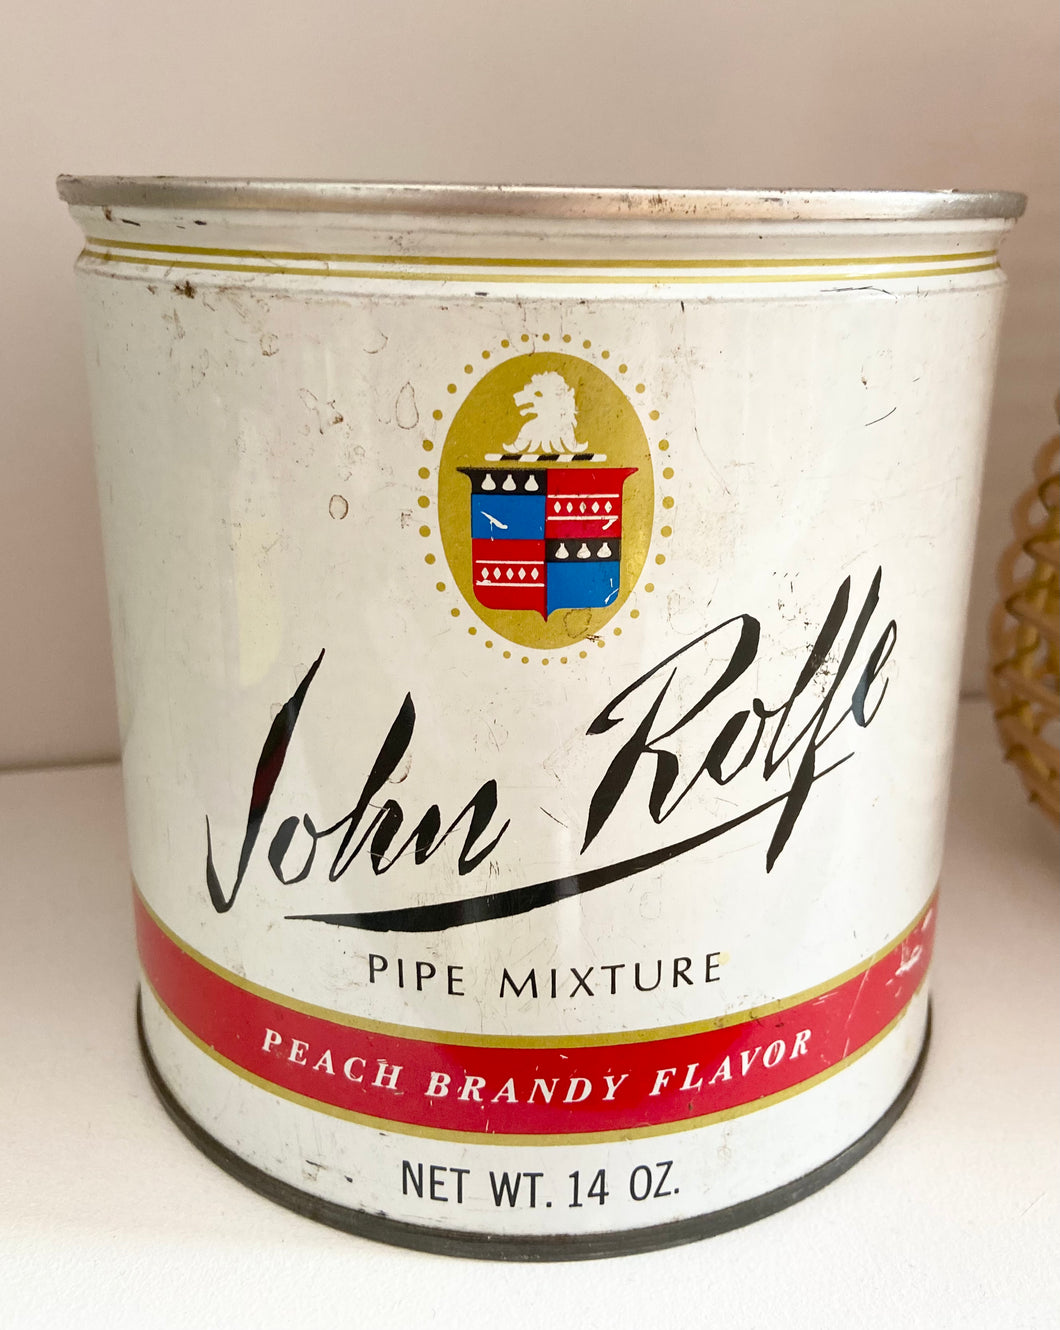 Vintage John Rolfe pipe mixture tin